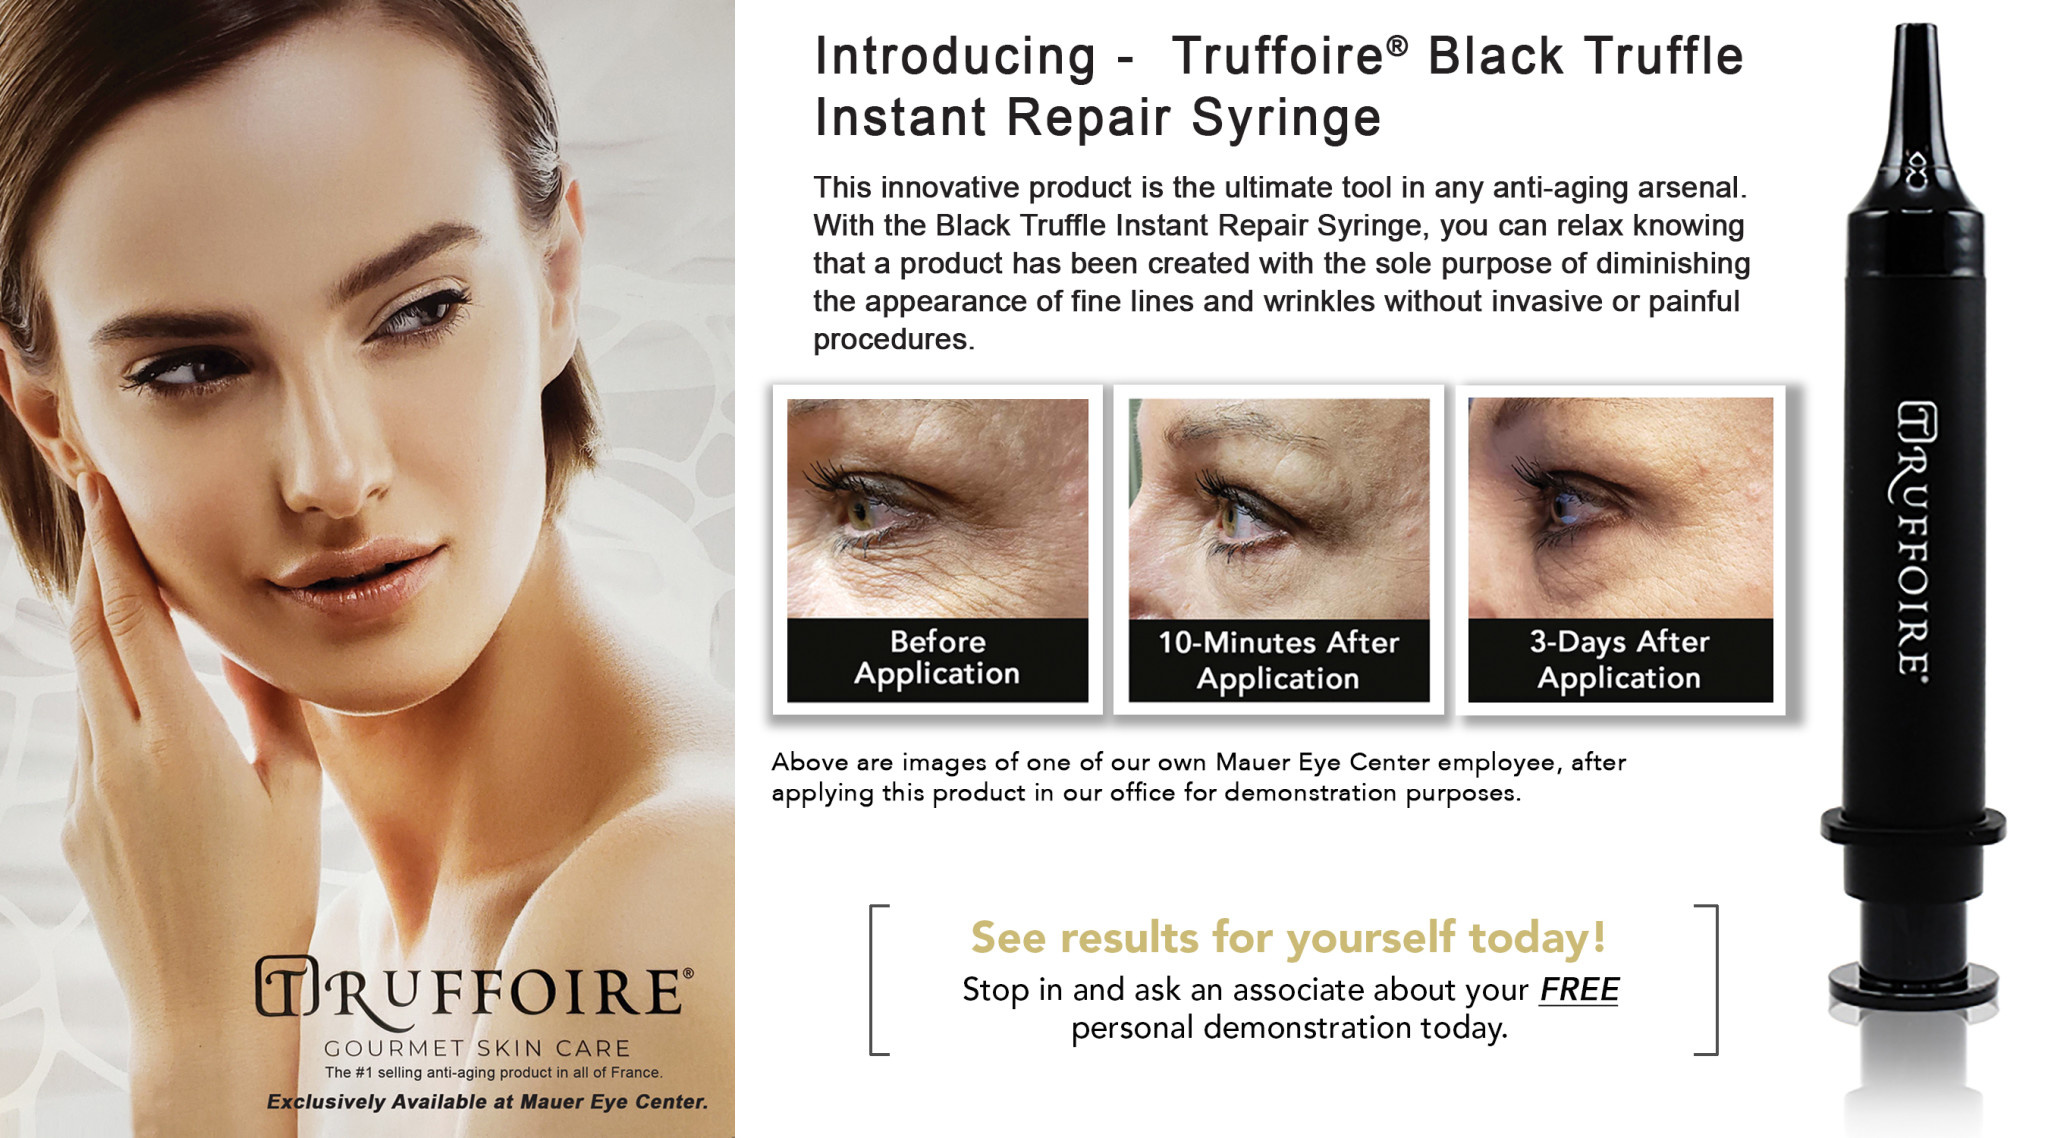 Black Truffle Instant Repair Syringe - Truffoire Gourmet Skincare